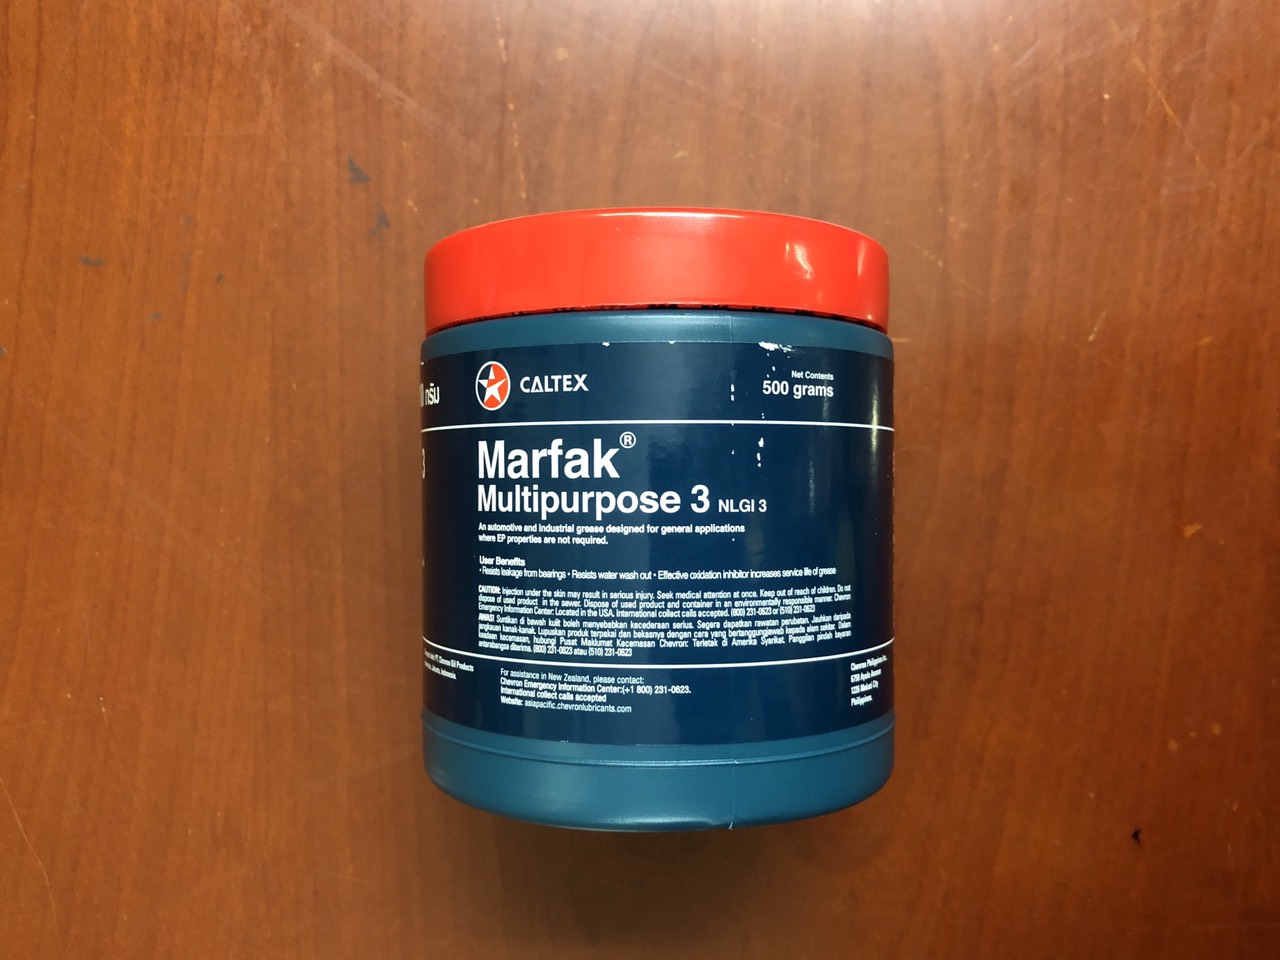 Marfak multipurpose 3